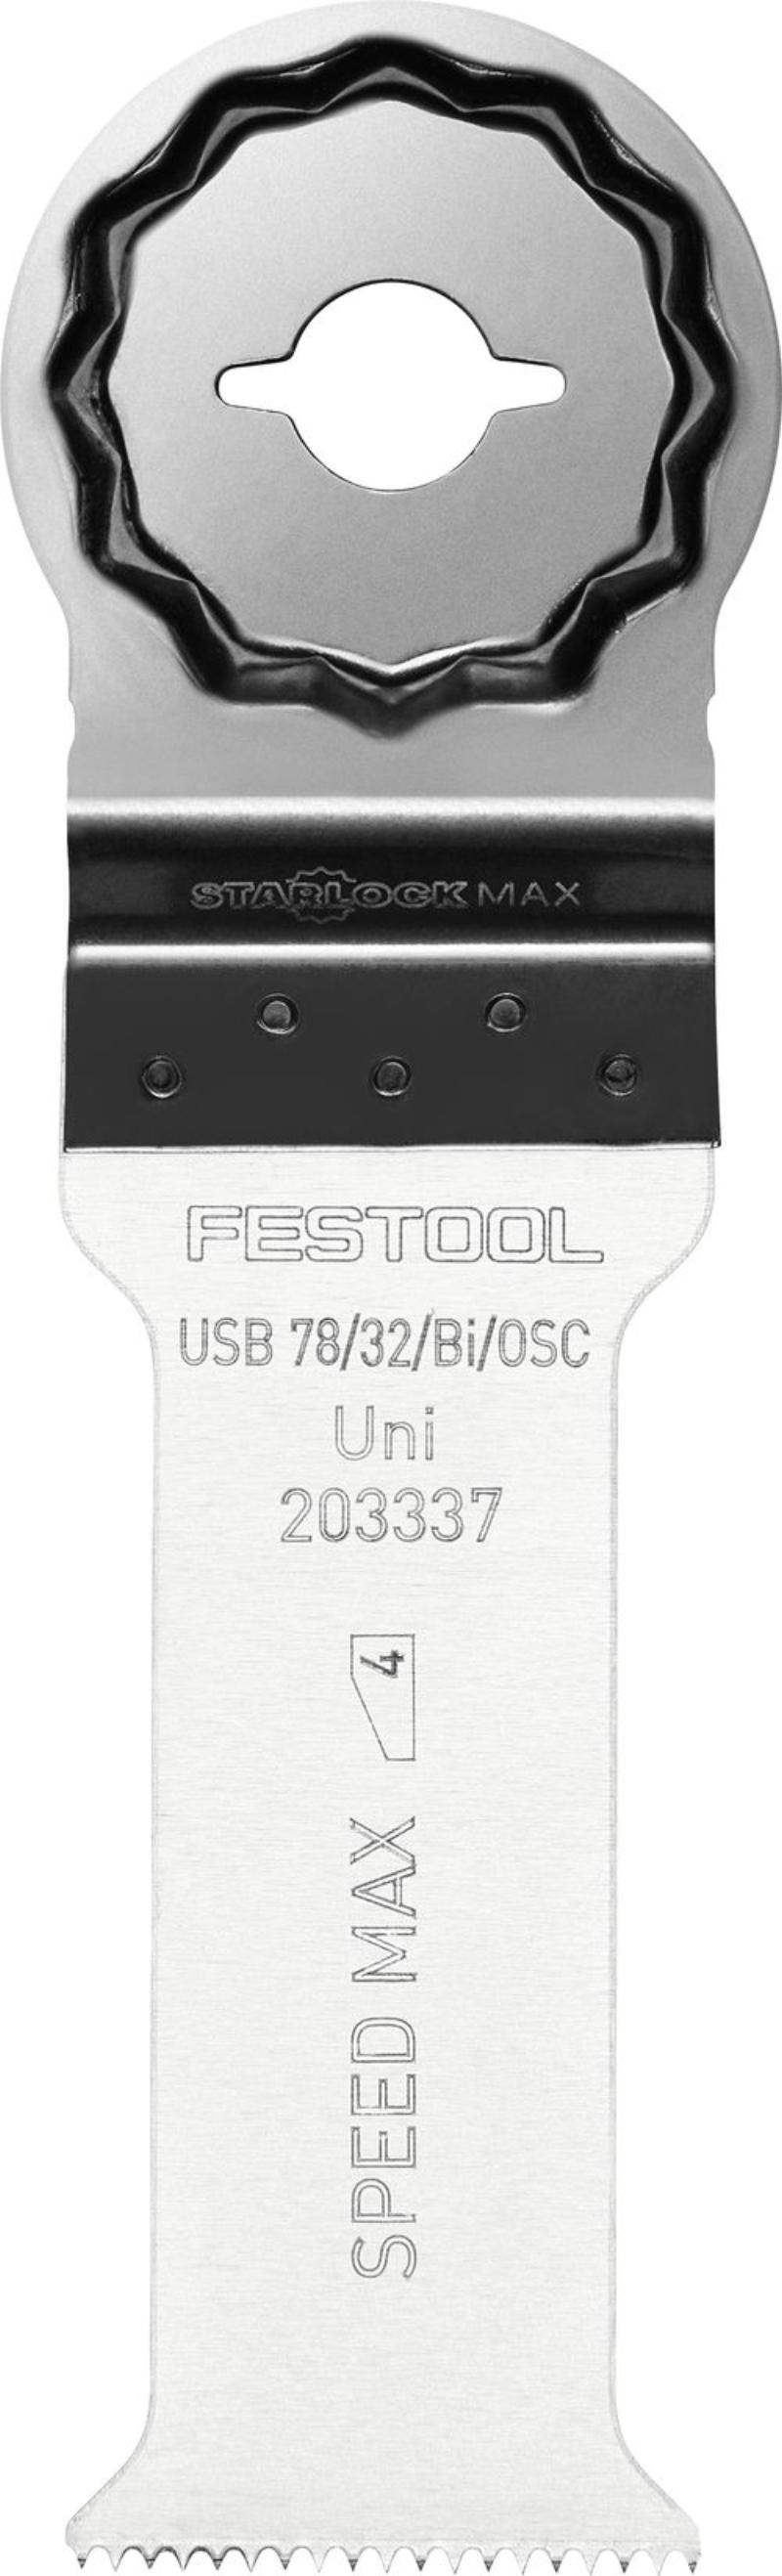 Festool Universal-savklinge USB 78/32/Bi/OSC, 1 stk